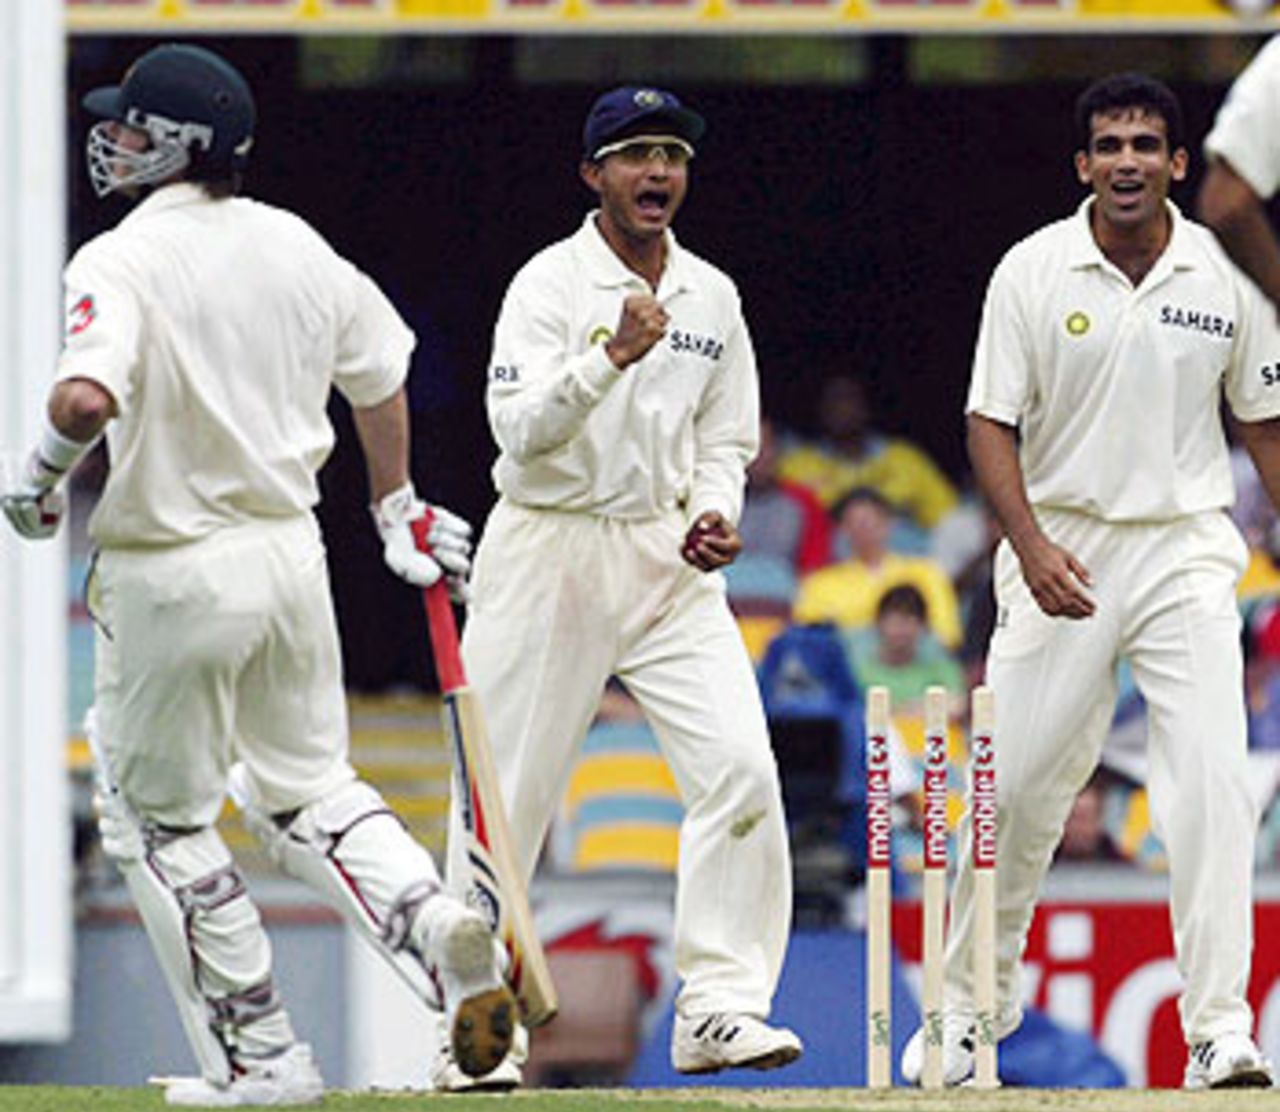 Sourav Ganguly exults as Damien Martyn is run out, Australia v India, 1st Test, Brisbane, 2nd day, December 5, 2003